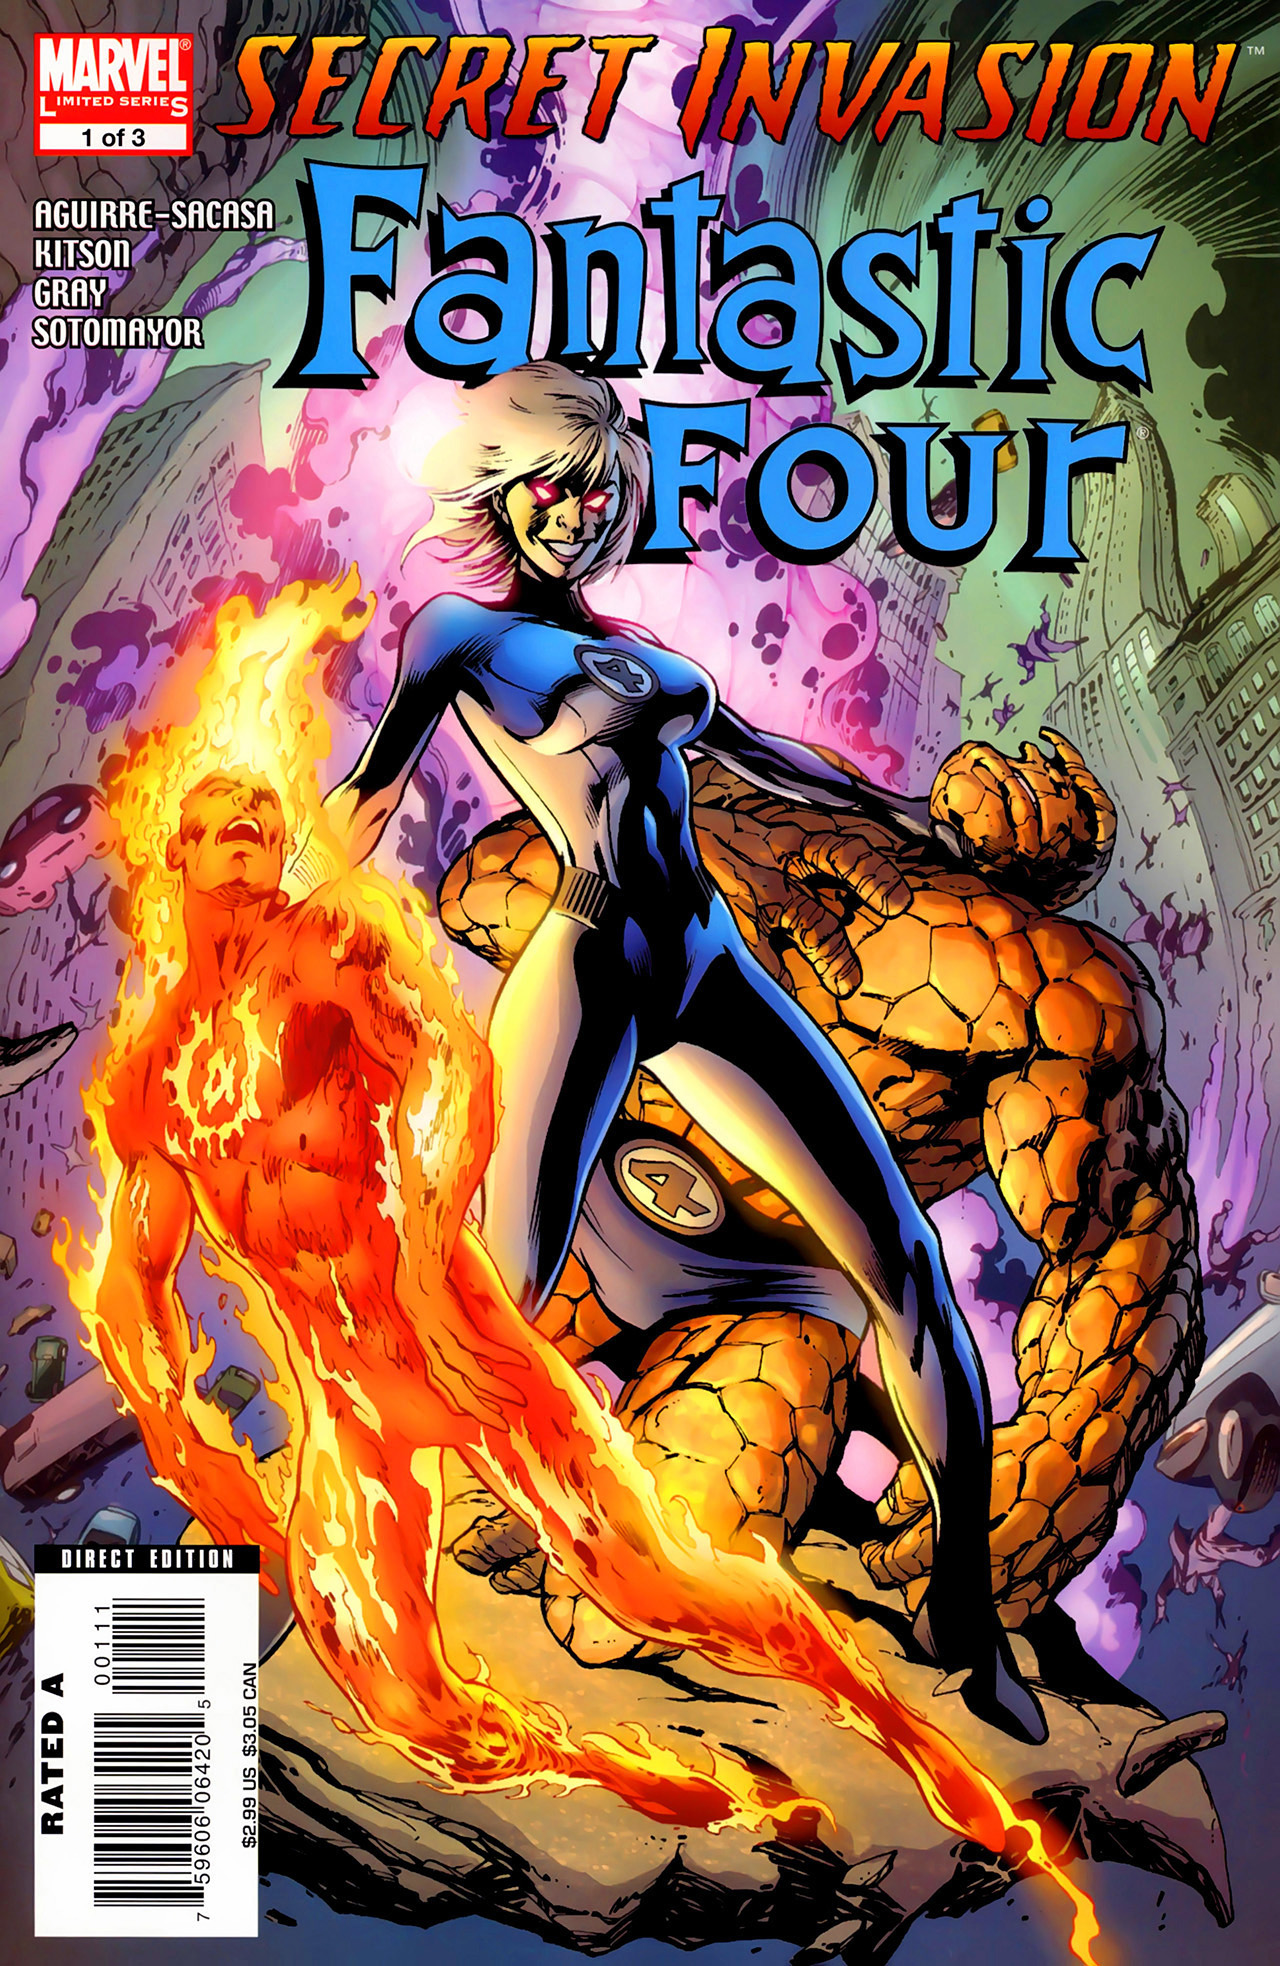 Read online Secret Invasion: Fantastic Four comic -  Issue #1 - 1